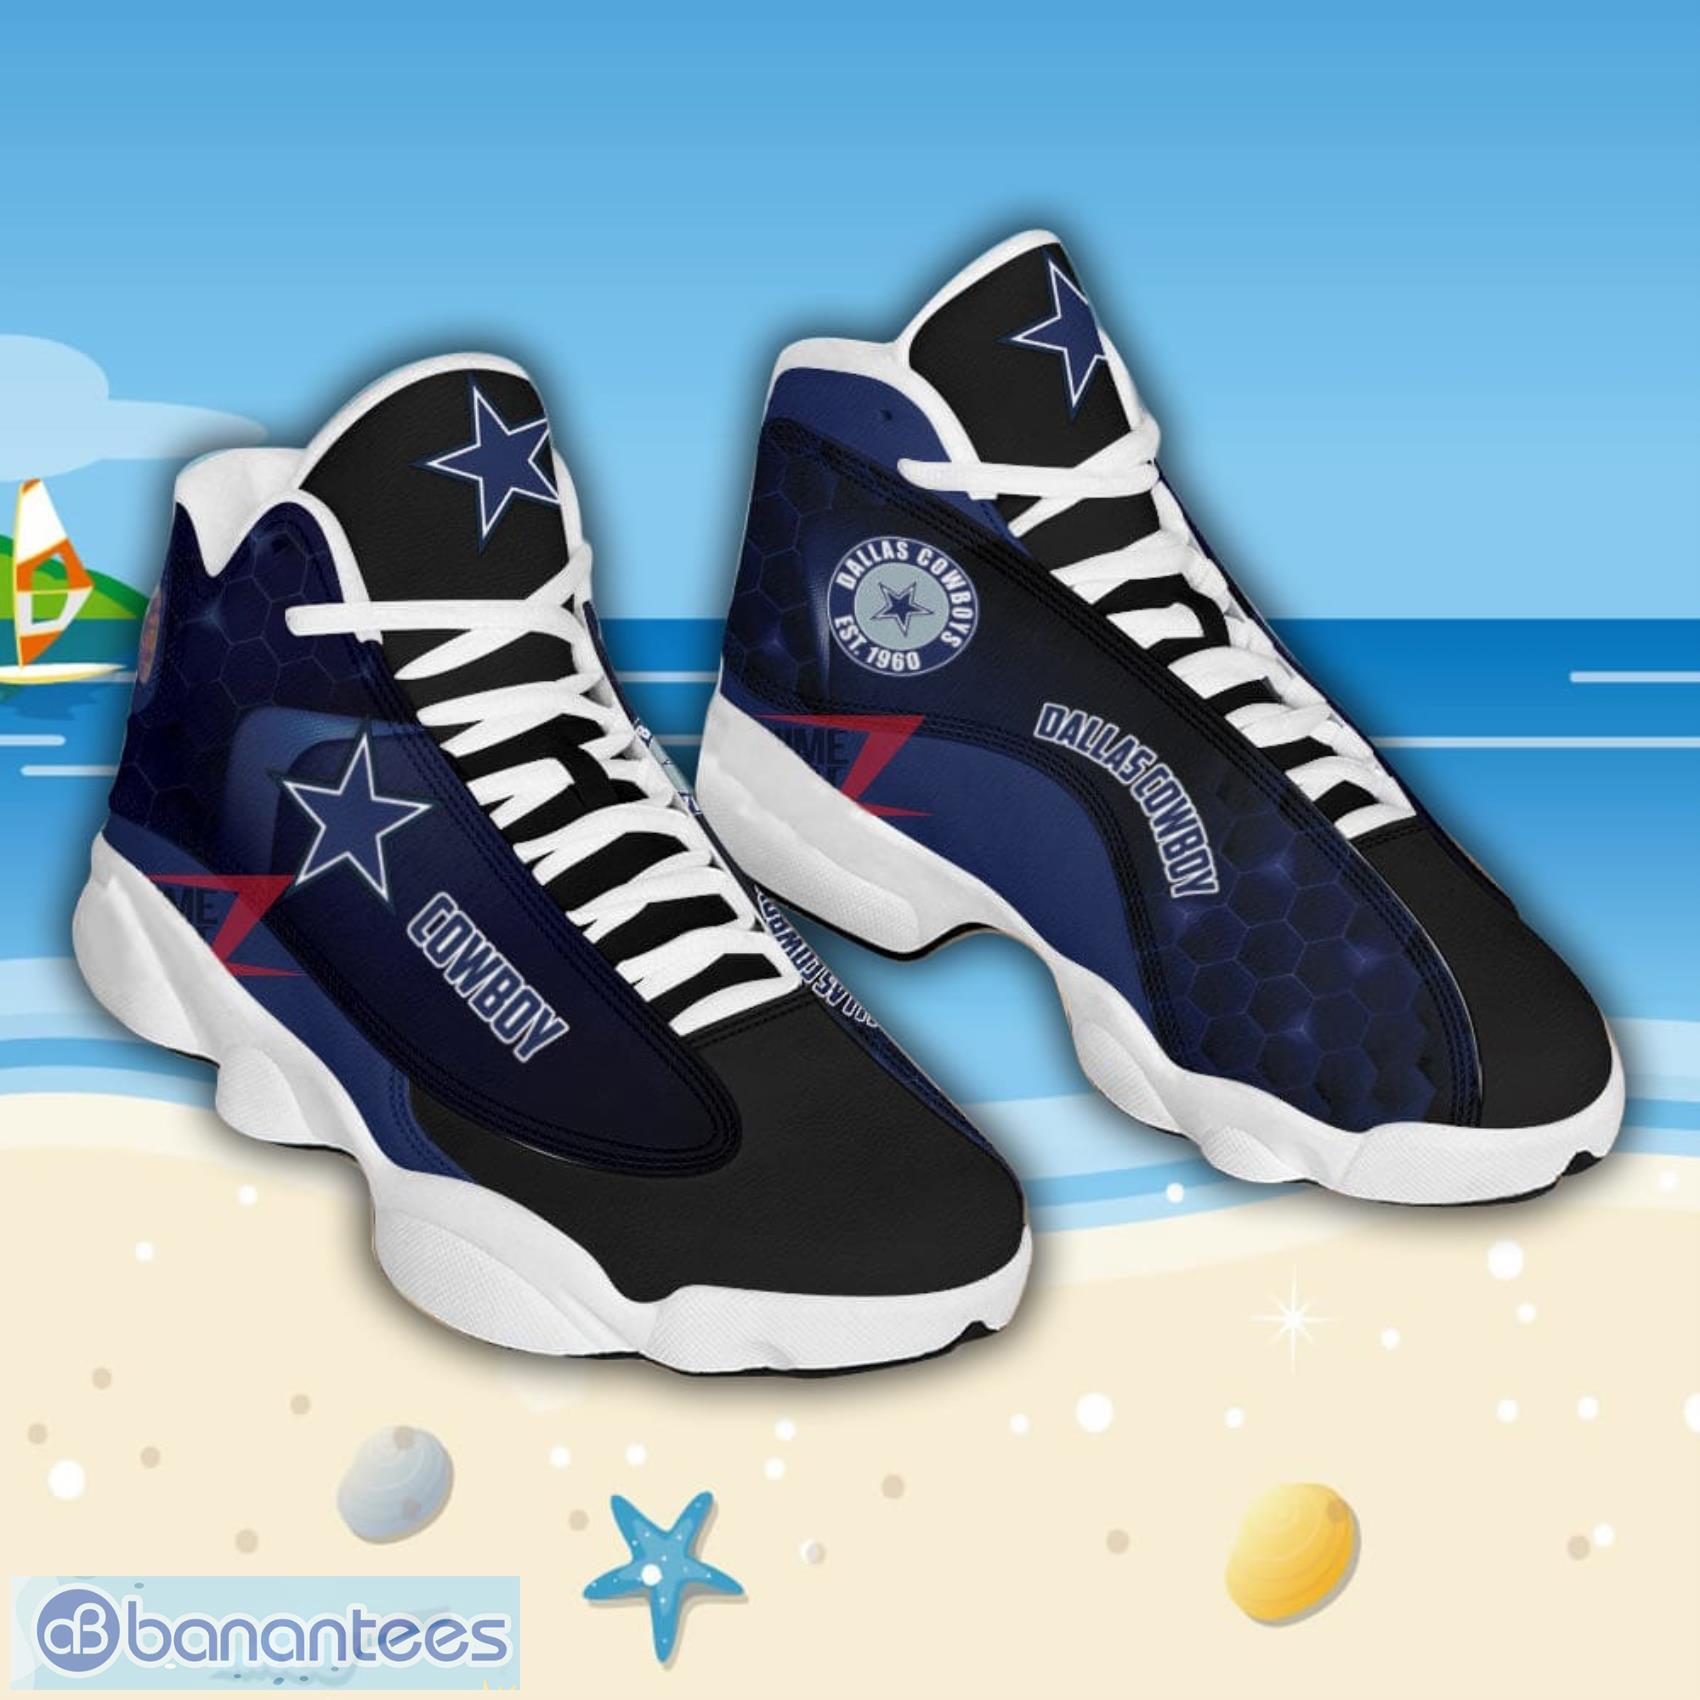 Dallas Cowboys Christmas Pattern Style Sneaker Air Jordan 11 Shoes